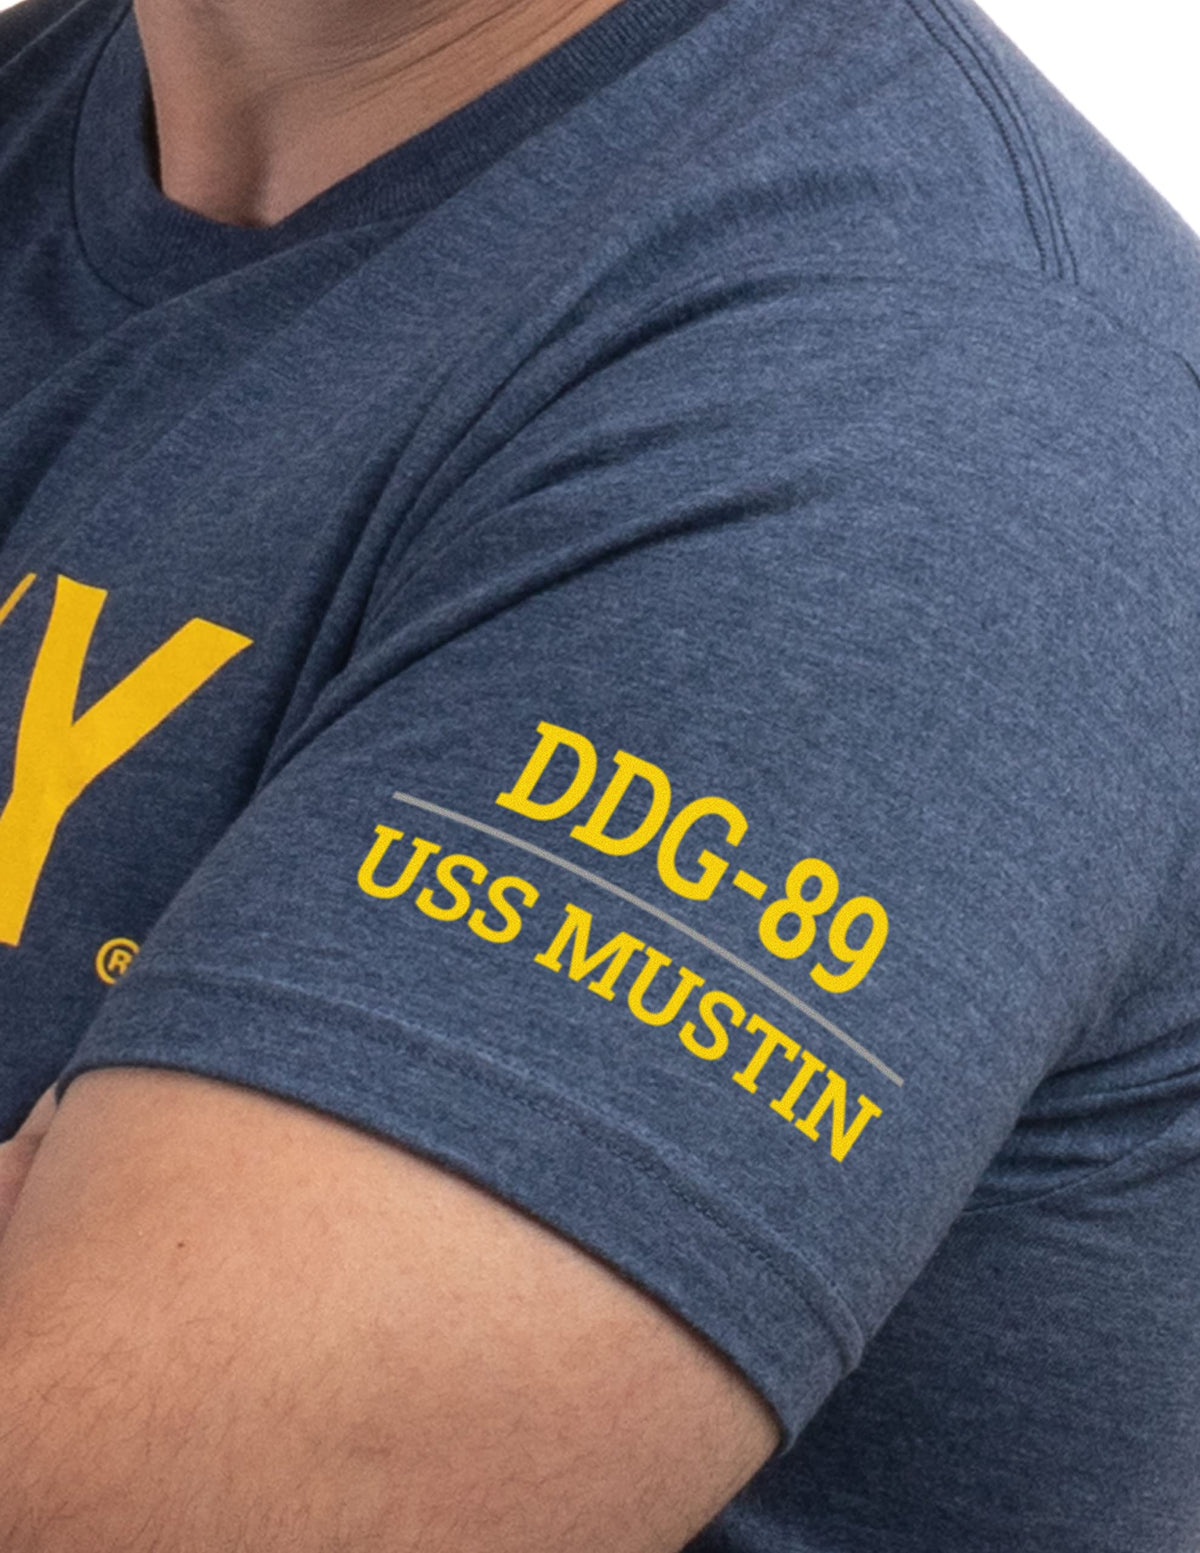 USS Mustin, DDG-89 | U.S. Navy Sailor Veteran USN United States Naval T-shirt for Men Women